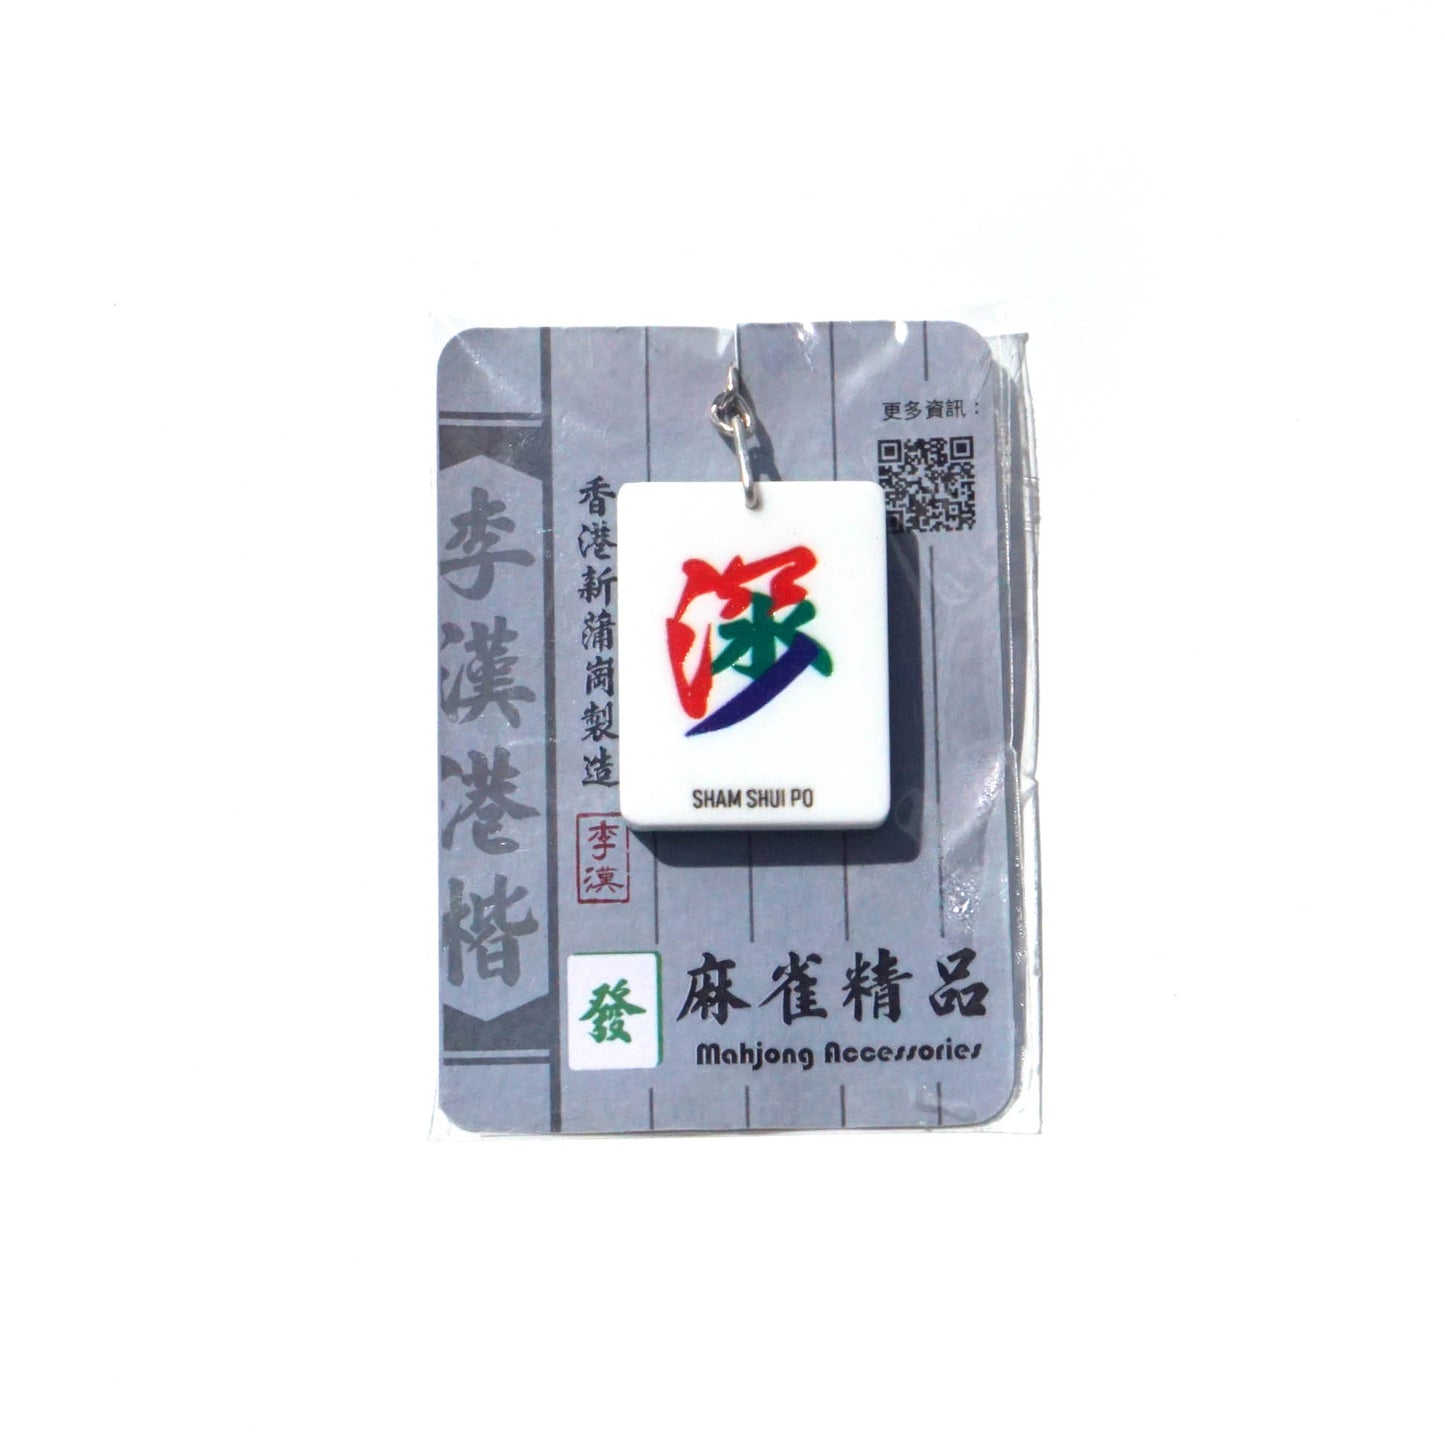 Mahjong HK District Keychain